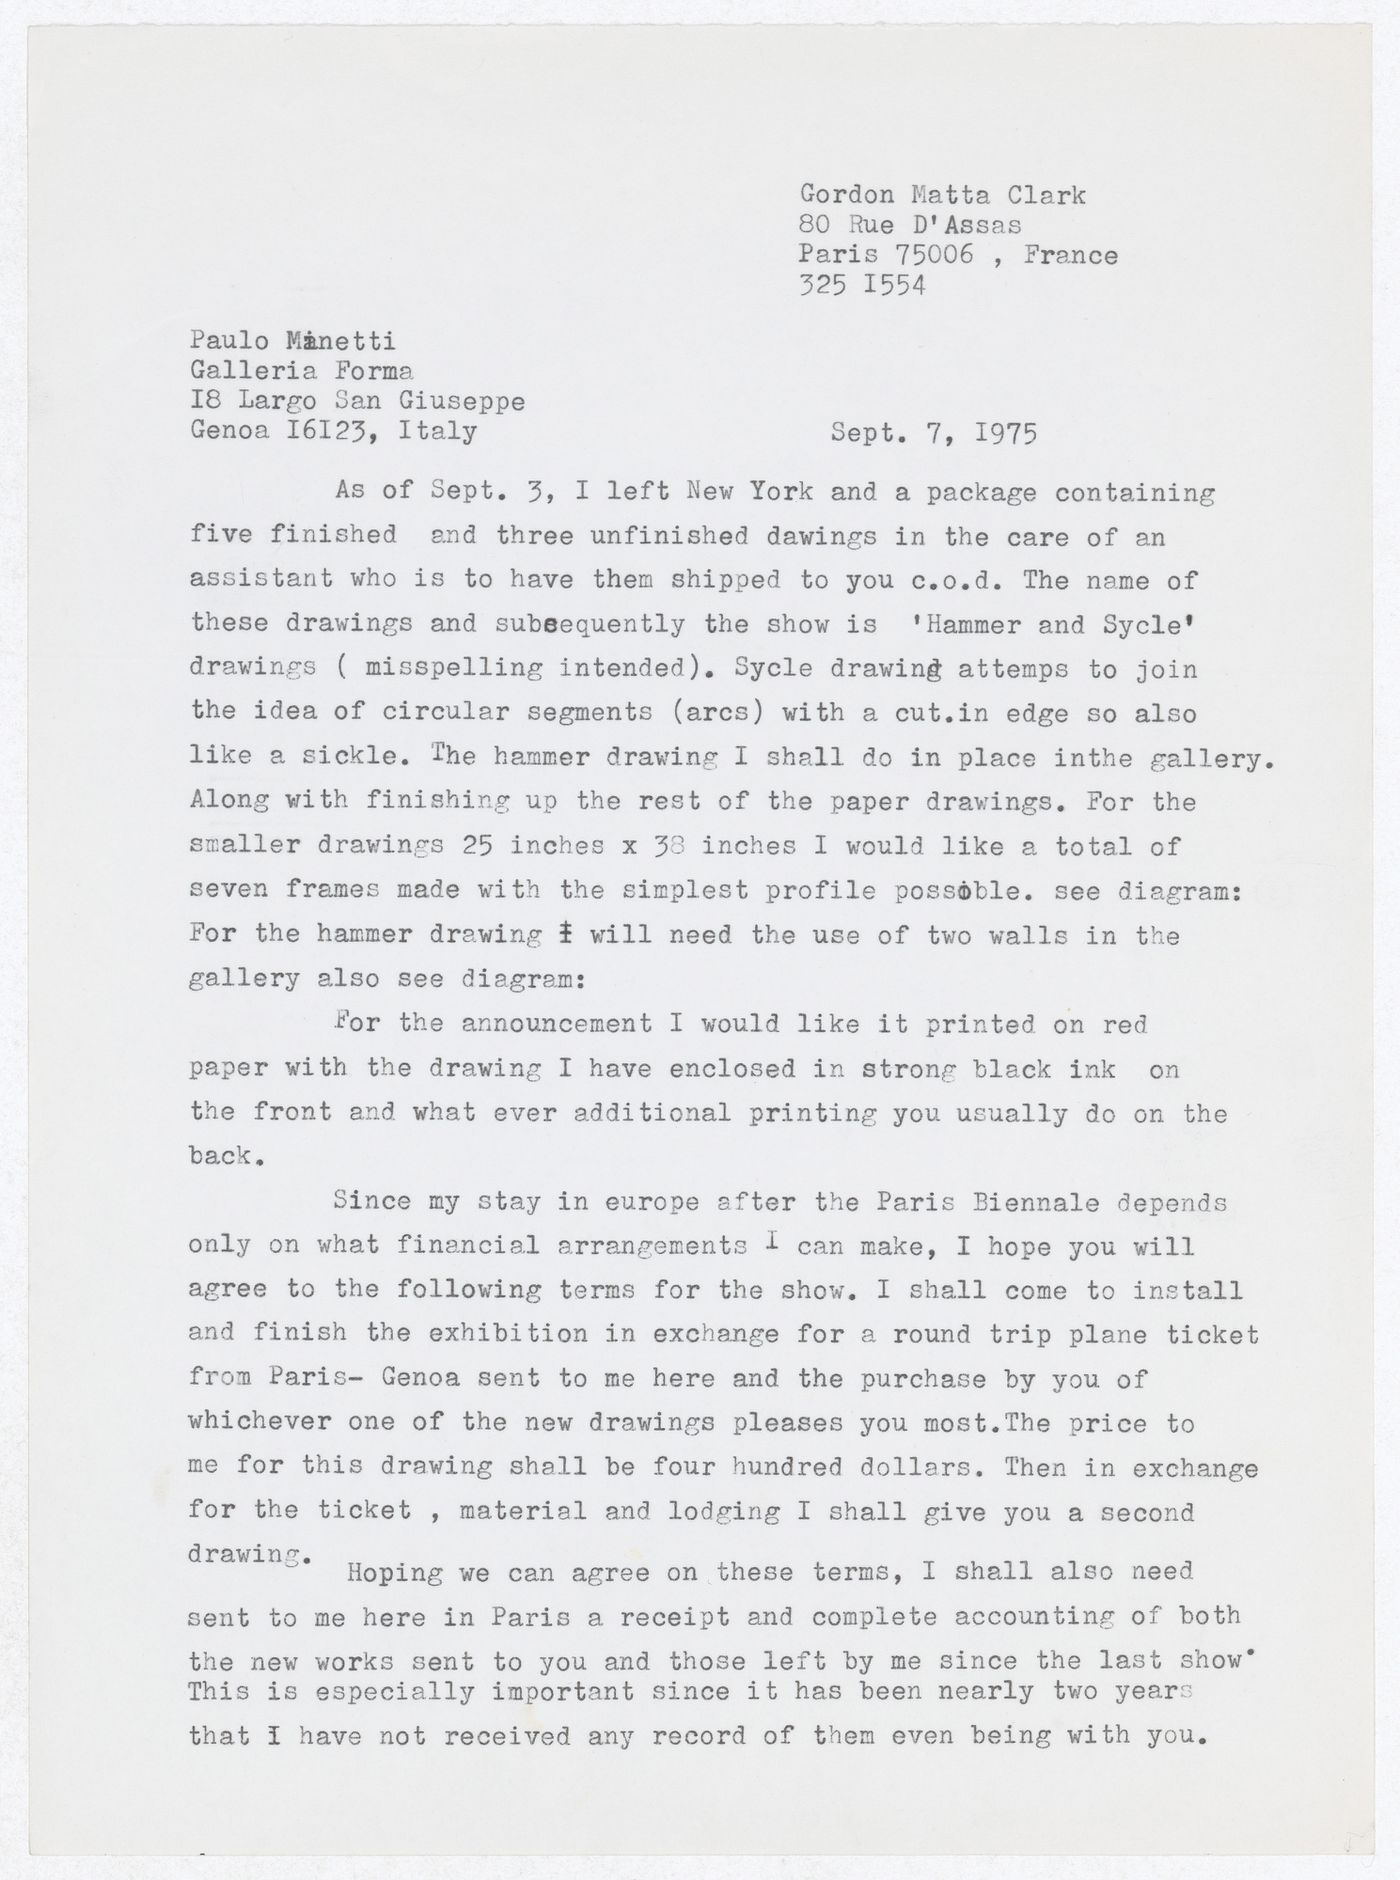 Letter from Gordon Matta-Clark to Paolo Minetti